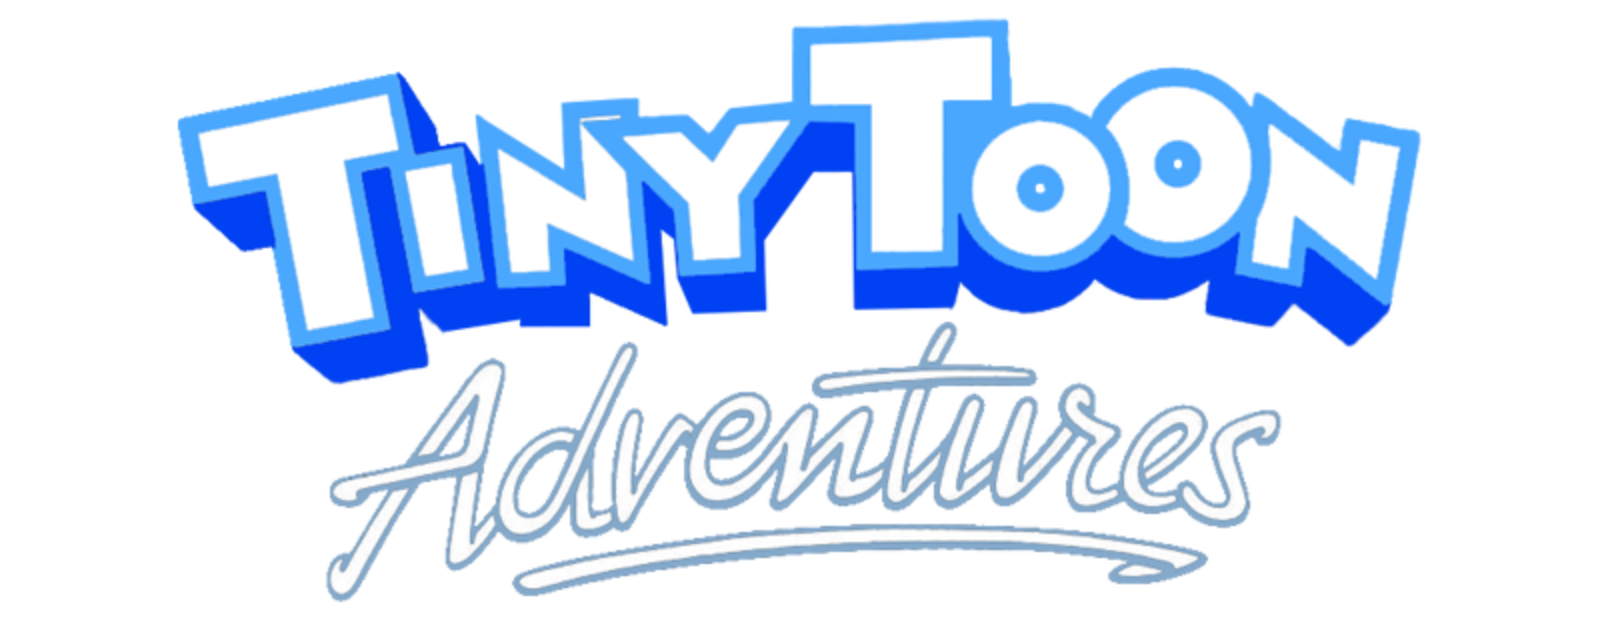 Tiny Toon Adventures Complete (11 DVDs Box Set)